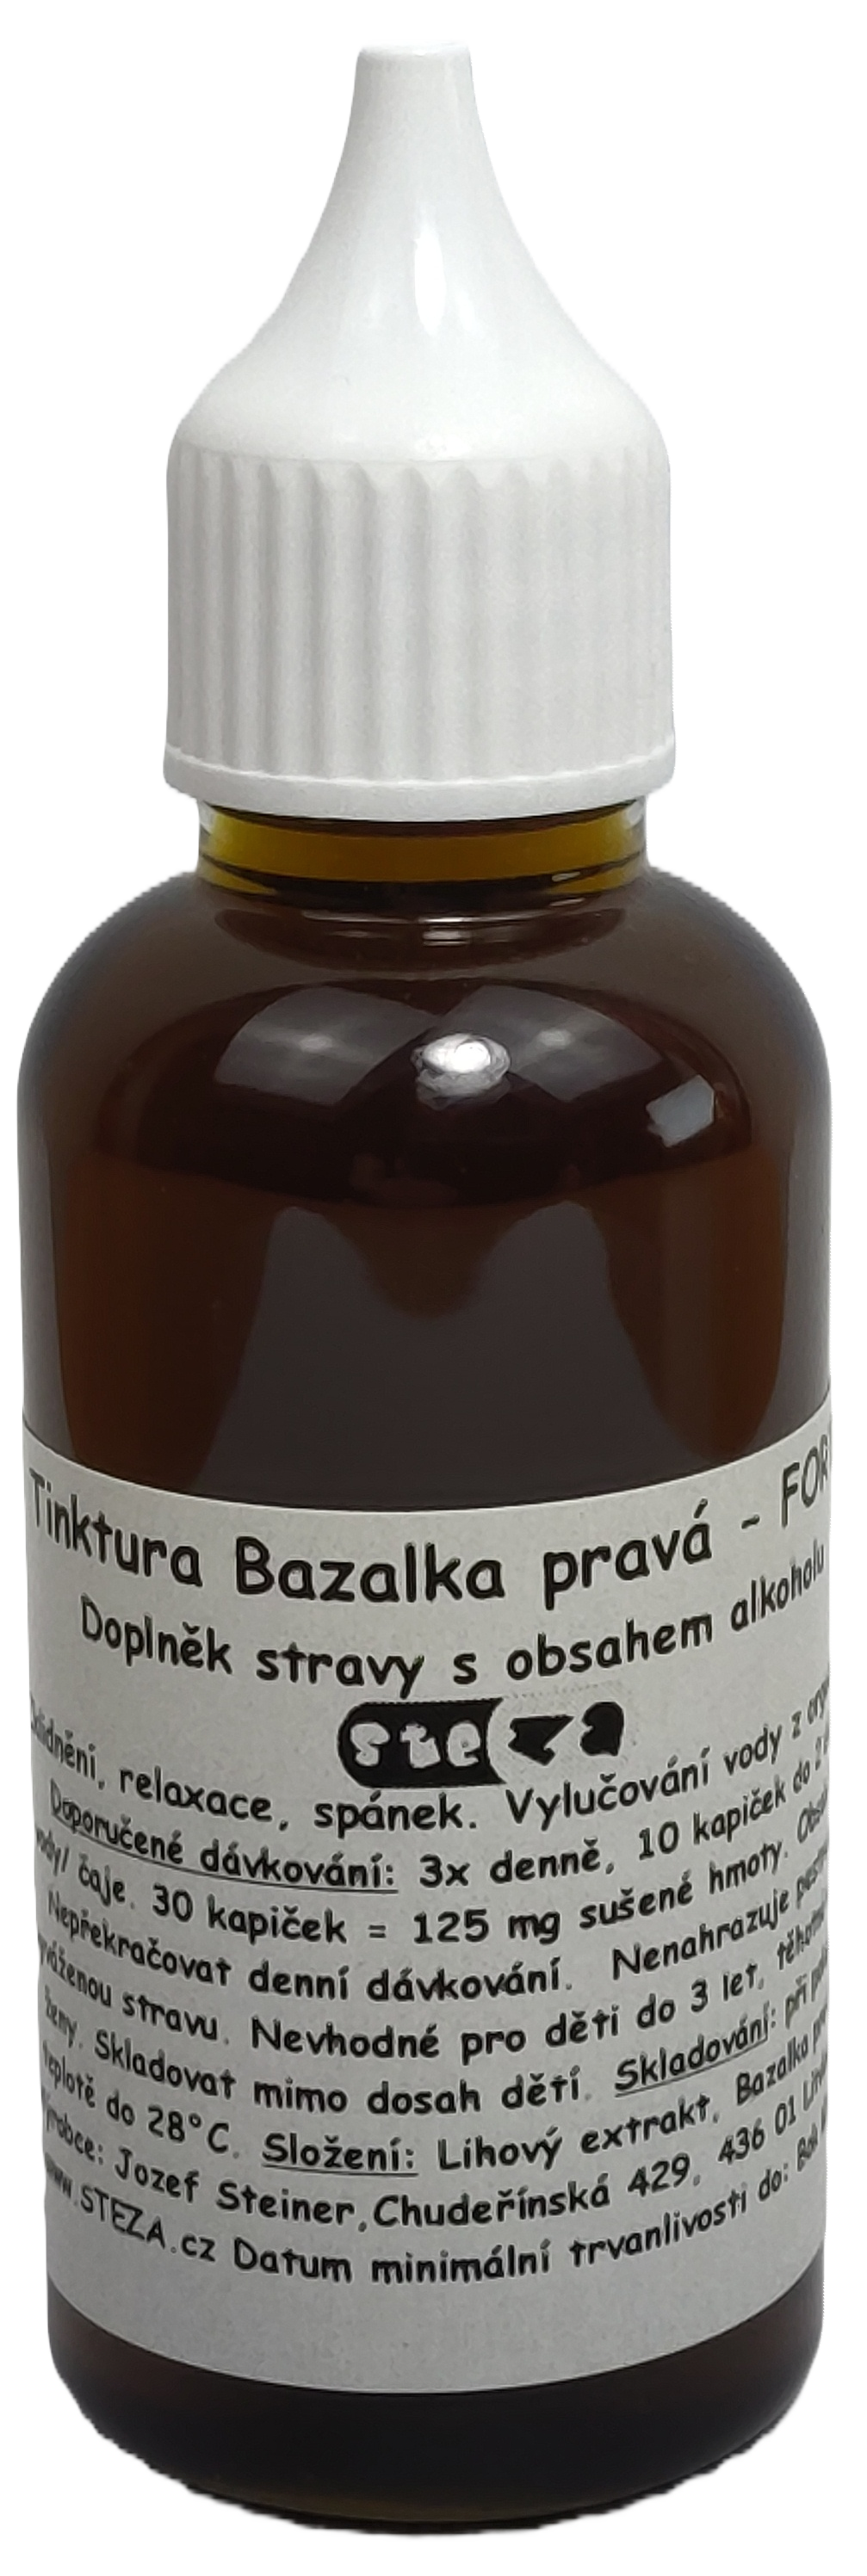 STEZA - Tinktura Bazalka pravá - FORTE 5x 50 ml. (Bazalková tinktura)